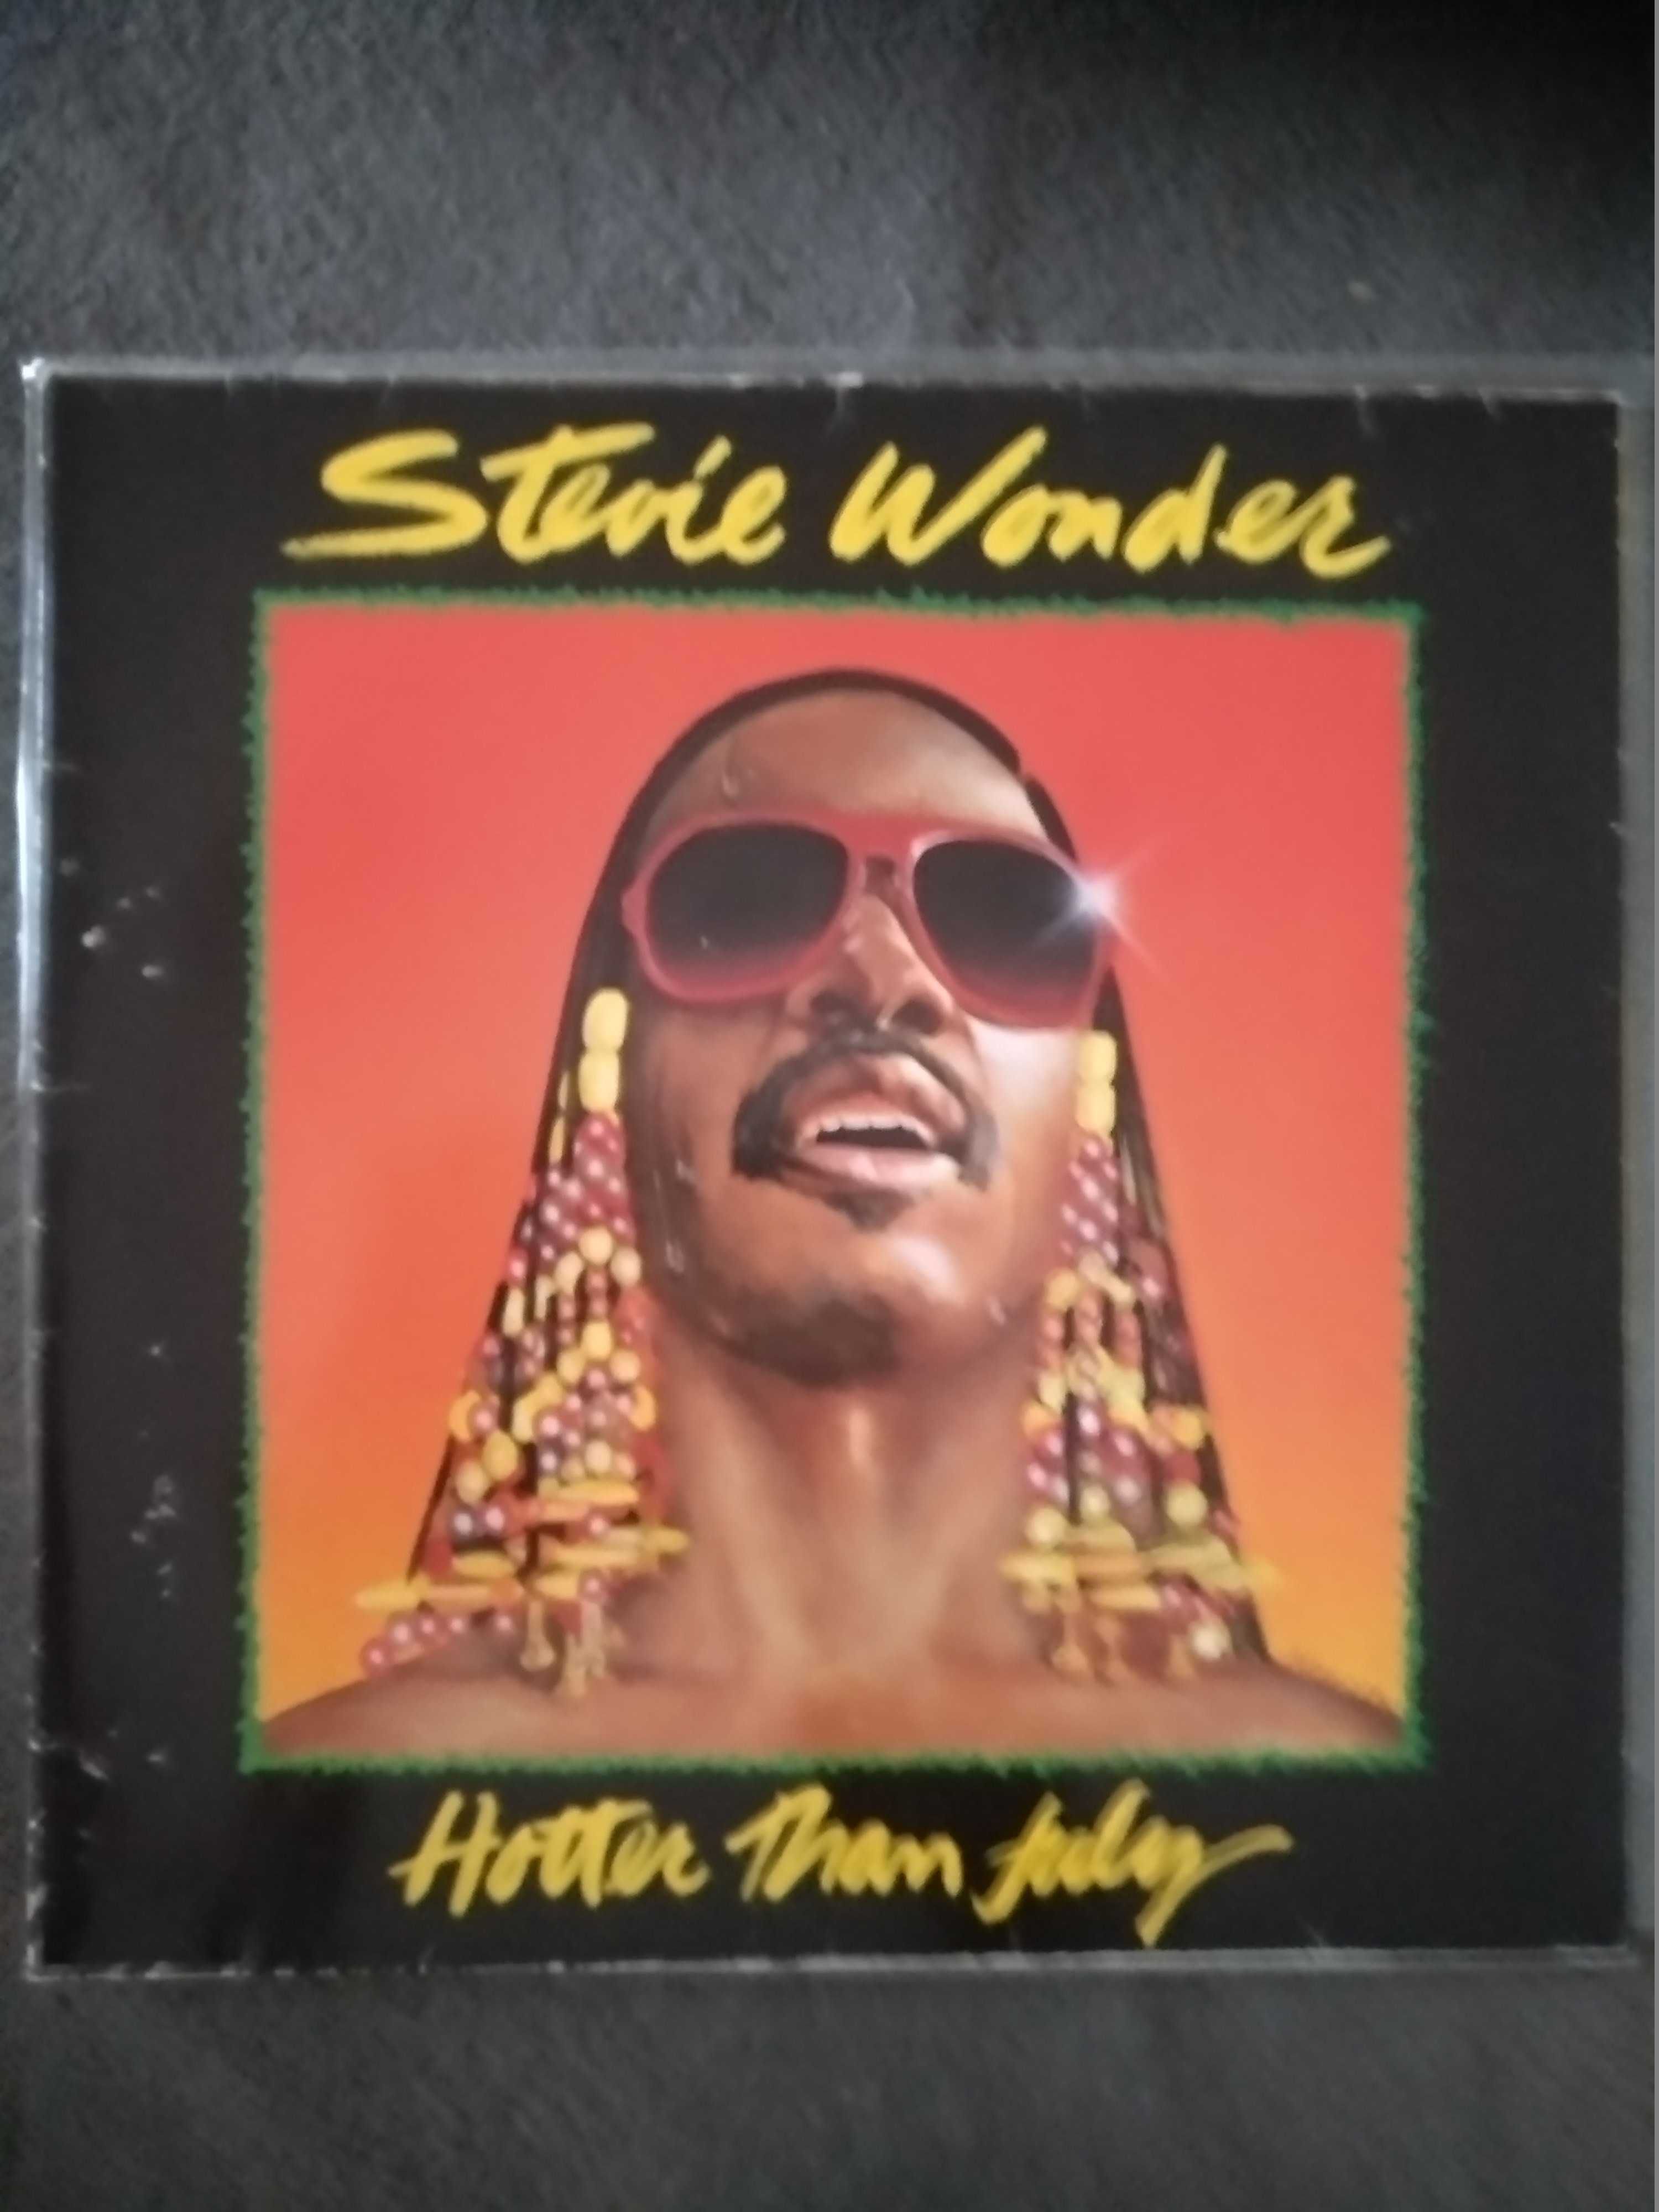 Stevie Wonder – Hotter Than July 1 press germany